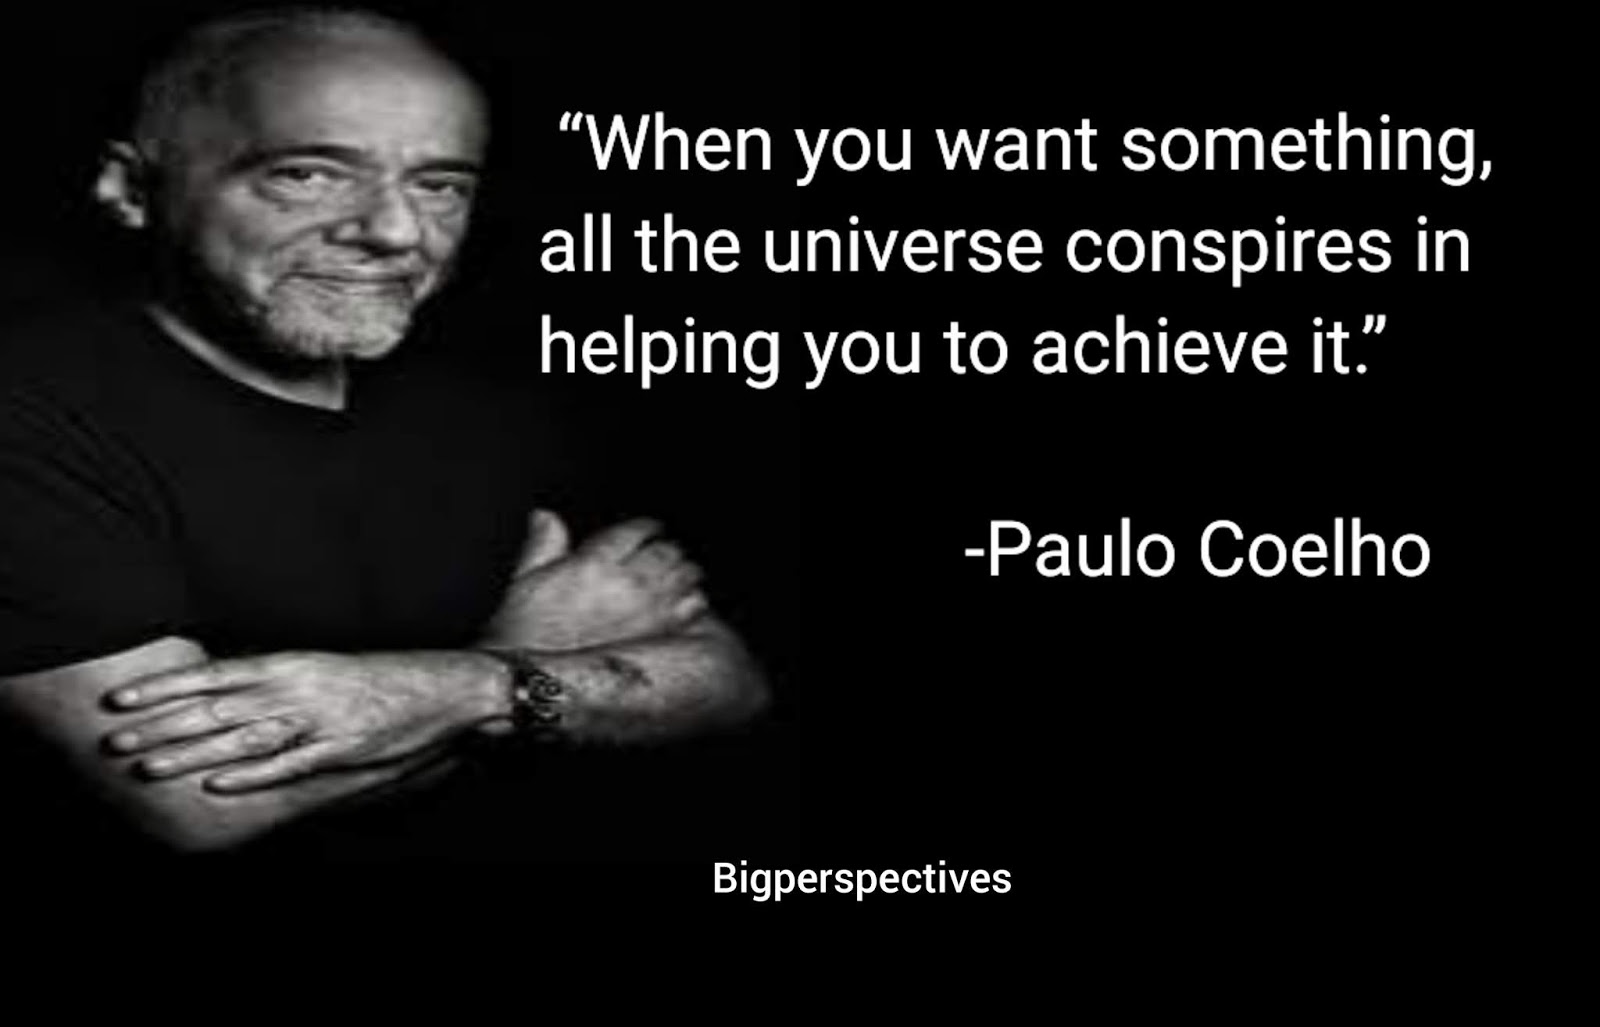 10 Amazing Paulo Coelho Quotes that will change your Life - Big